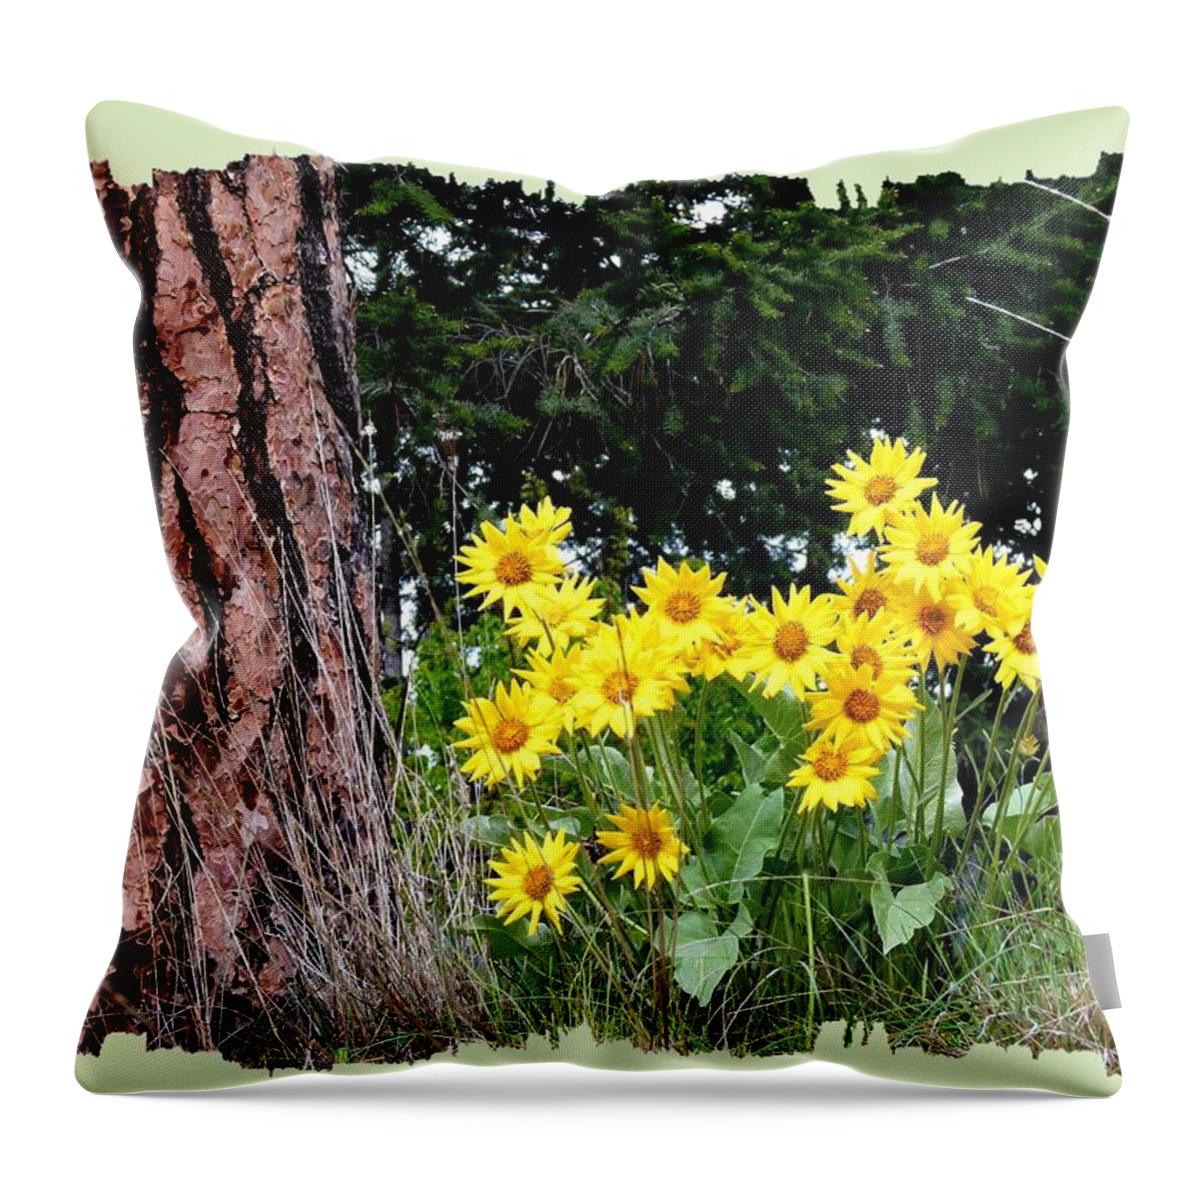 Wild Oyama Sunflowers Throw Pillow featuring the photograph Wild Oyama Sunflowers by Will Borden